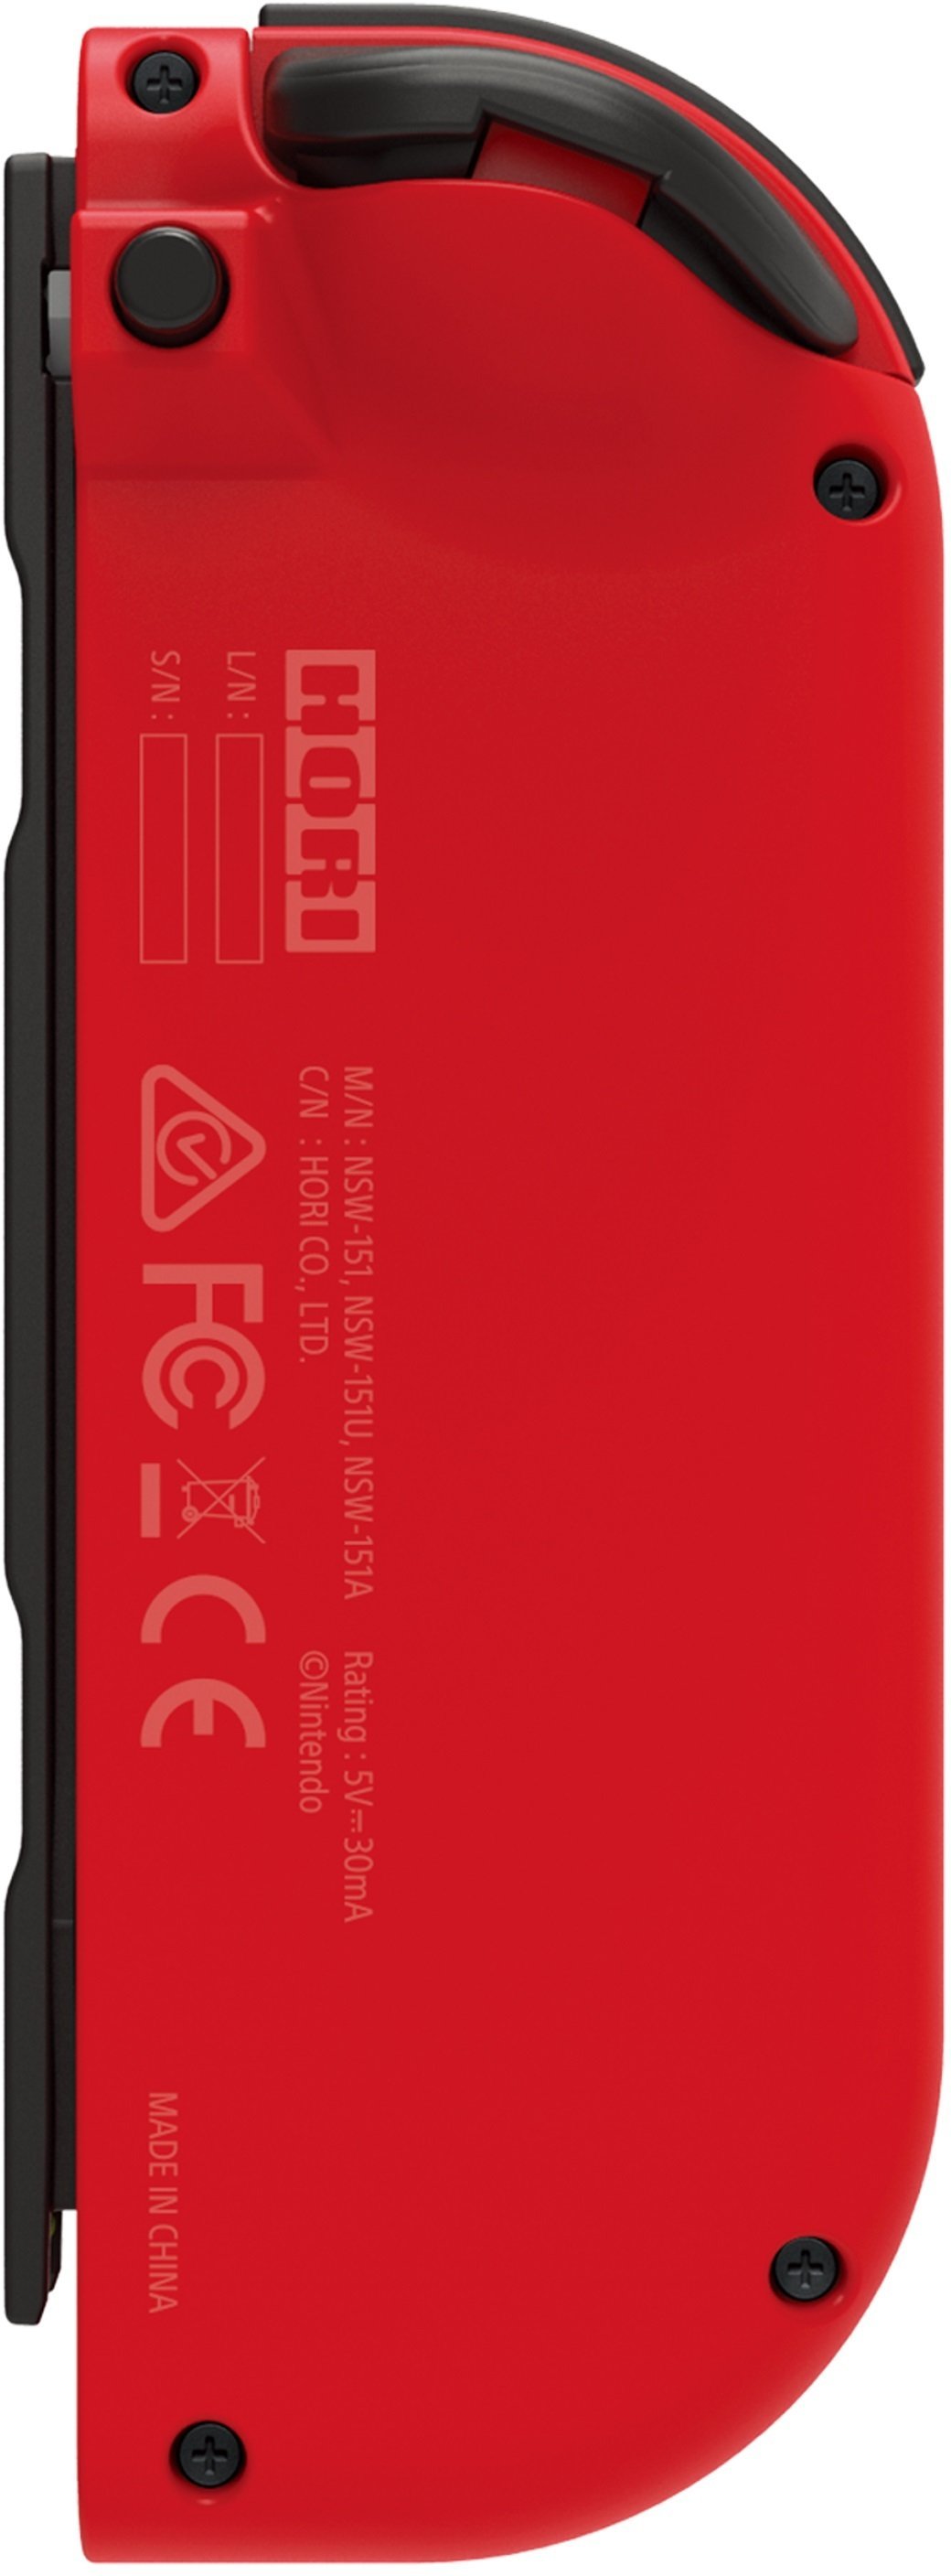 Контроллер Hori D-Pad Mario (левый) для Nintendo Switch, Red (810050910477) - фото 2